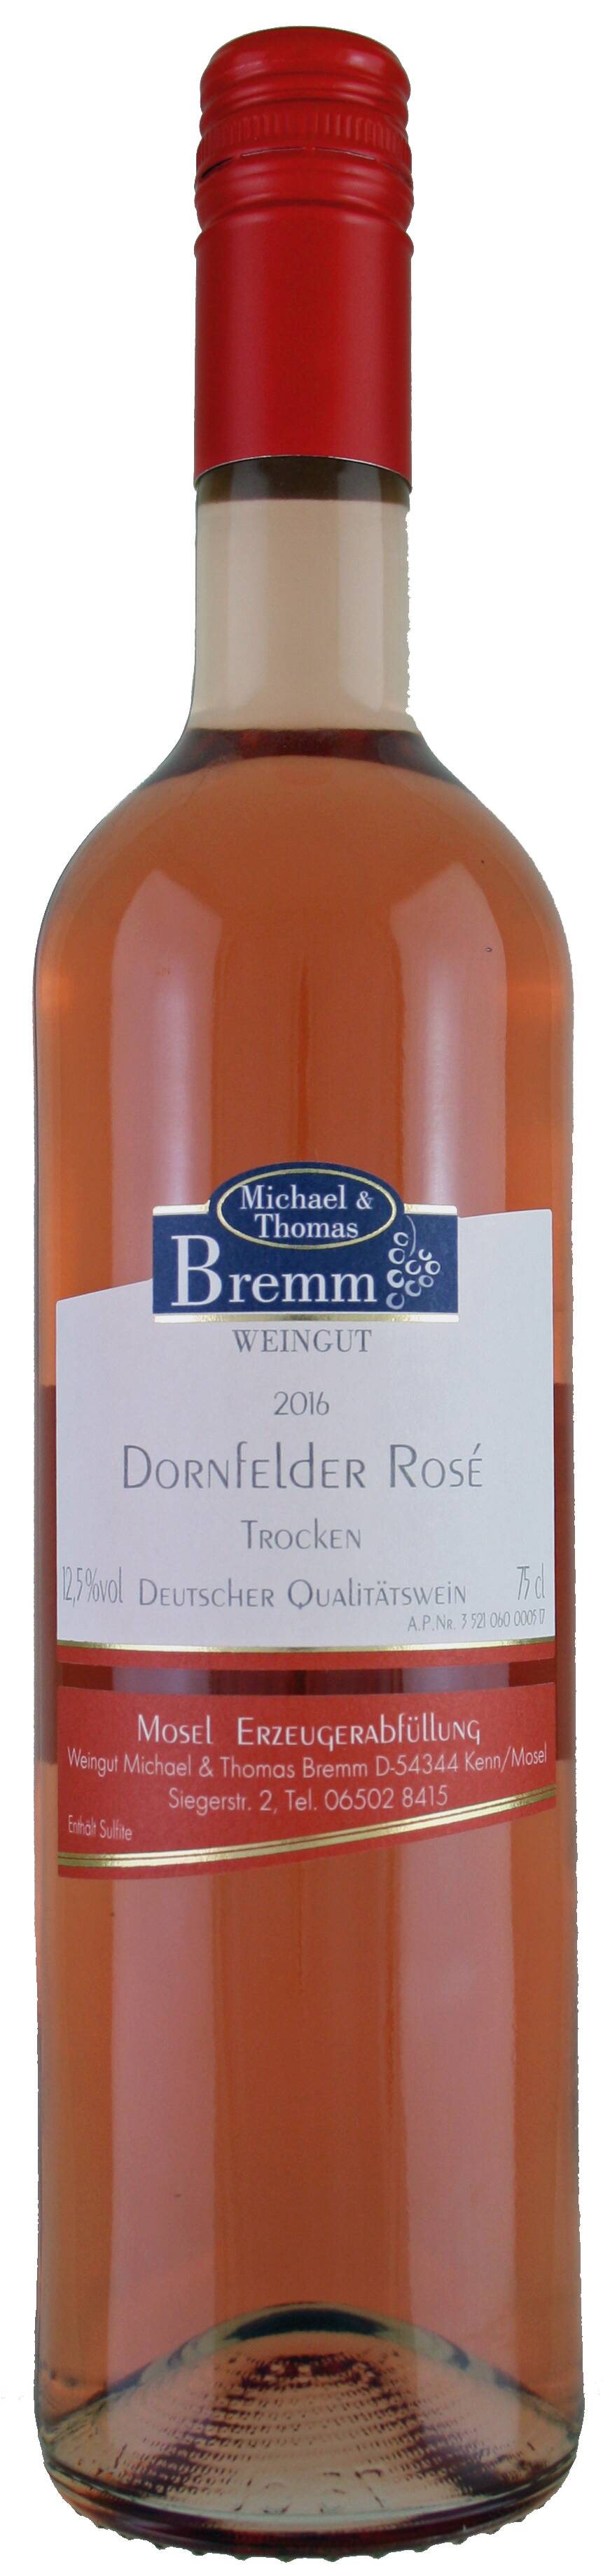 2020 Dornfelder Rosé trocken Weingut Bremm